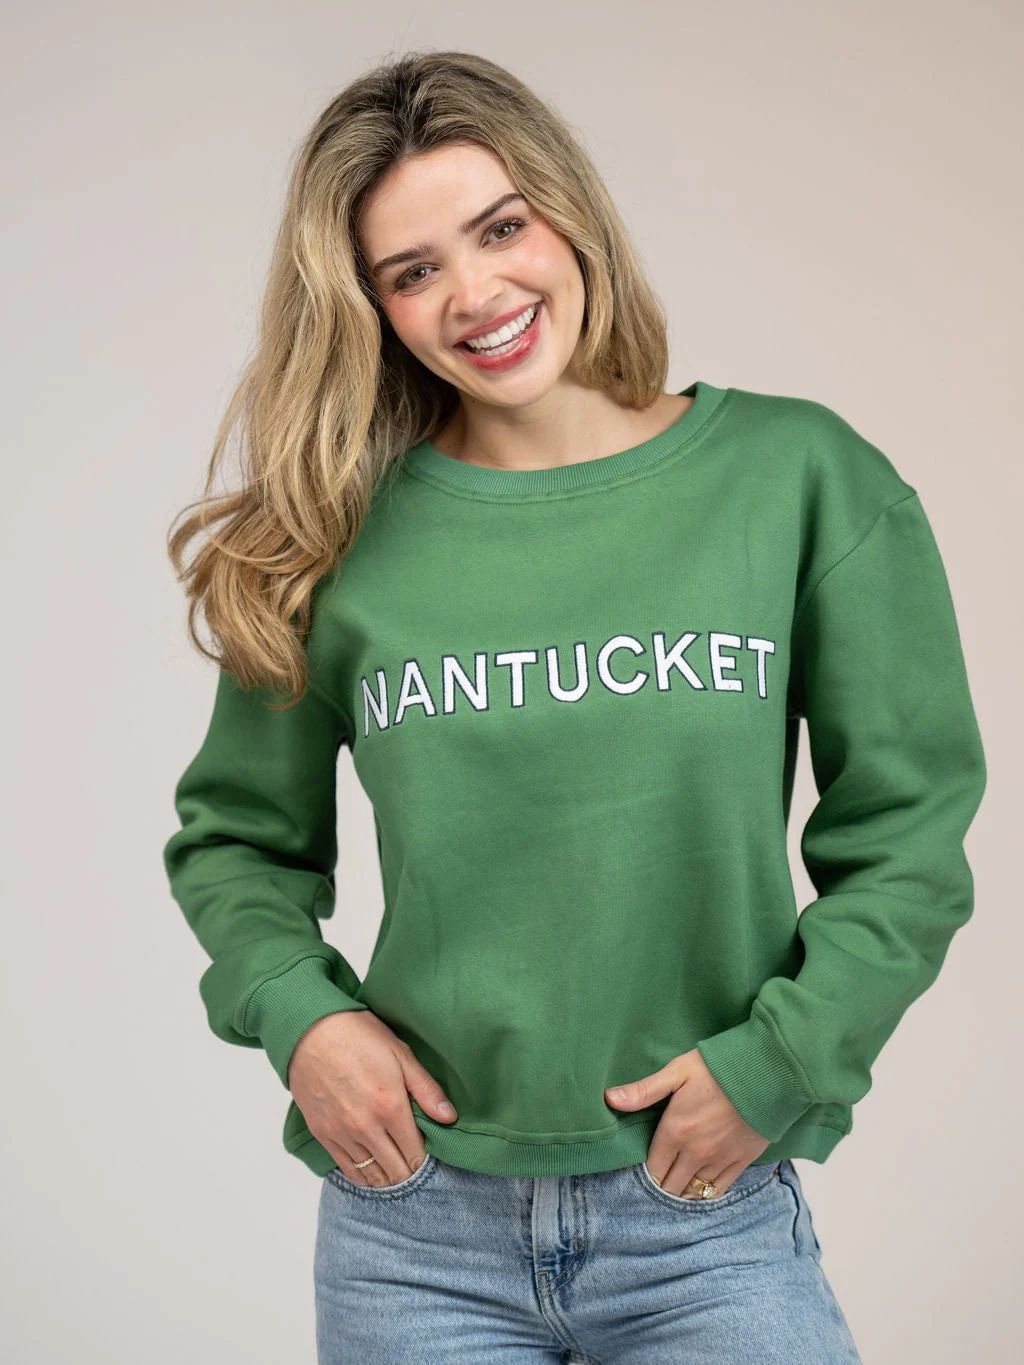 Nantucket Outline Crewneck Sweatshirt in Green | Beau & Ro